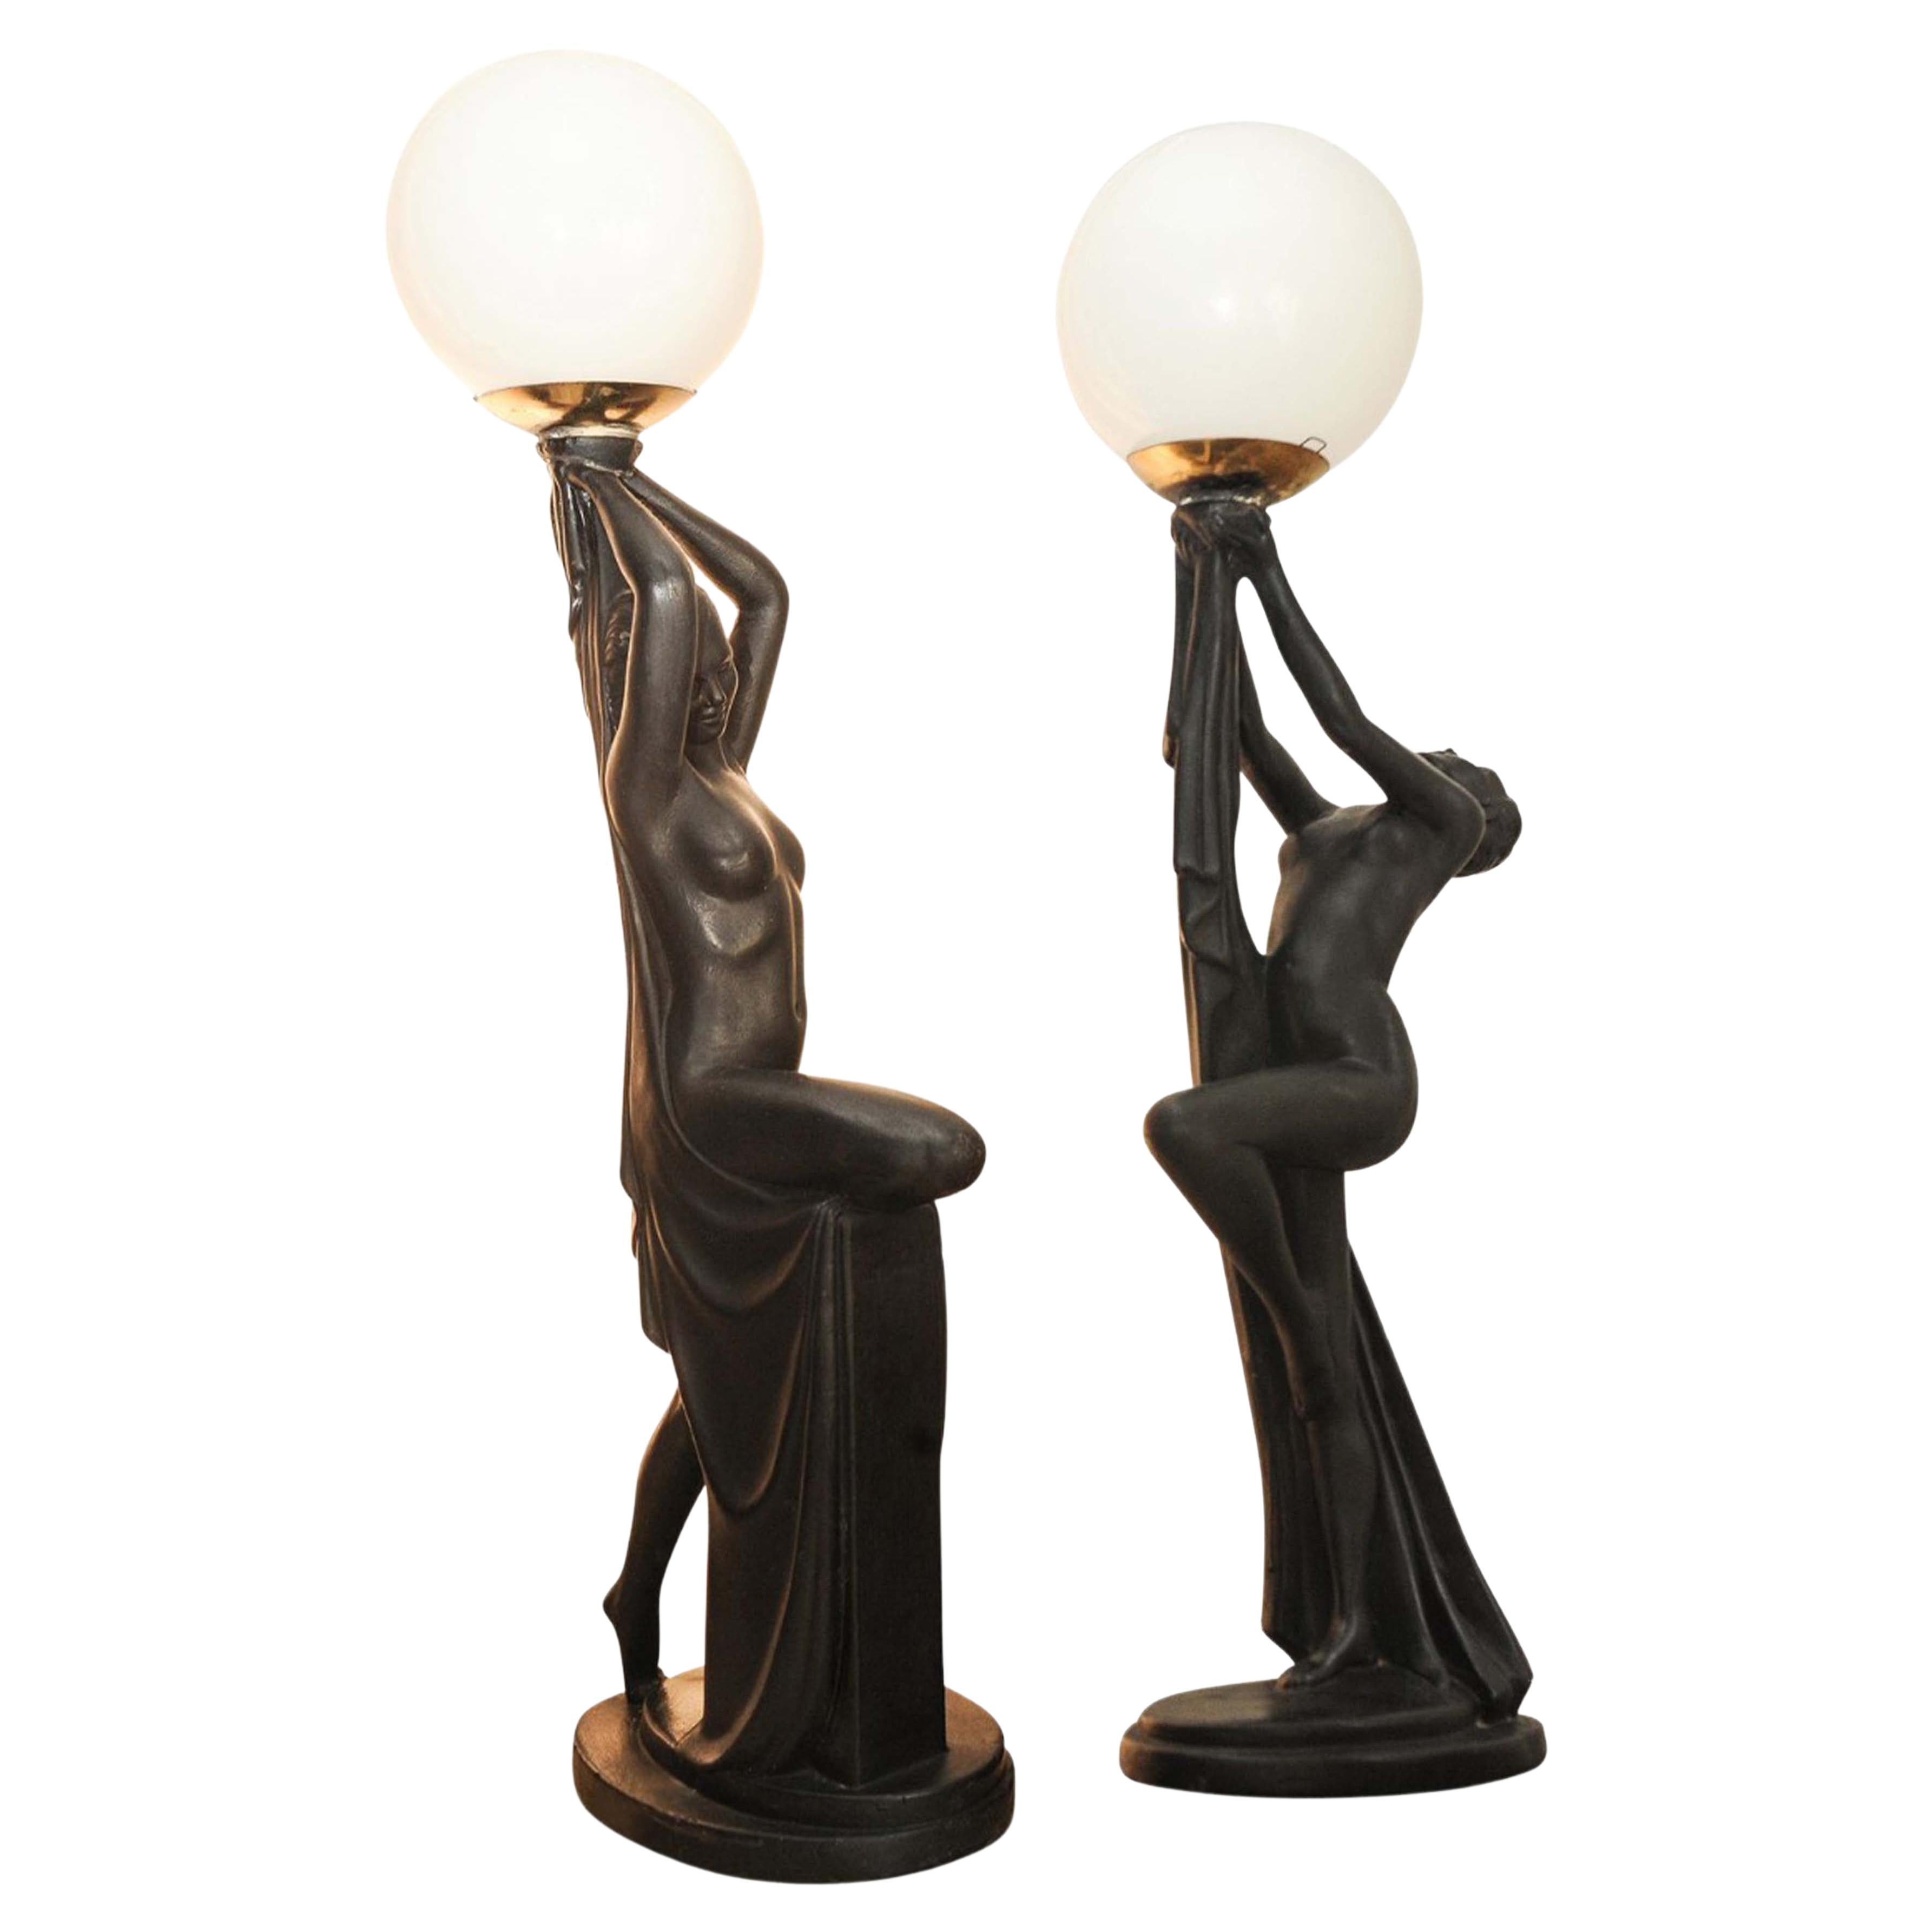 Pair of Exquisite Art Deco Ebonized Plaster Nude Feminine Form Table Lamps 1930s For Sale